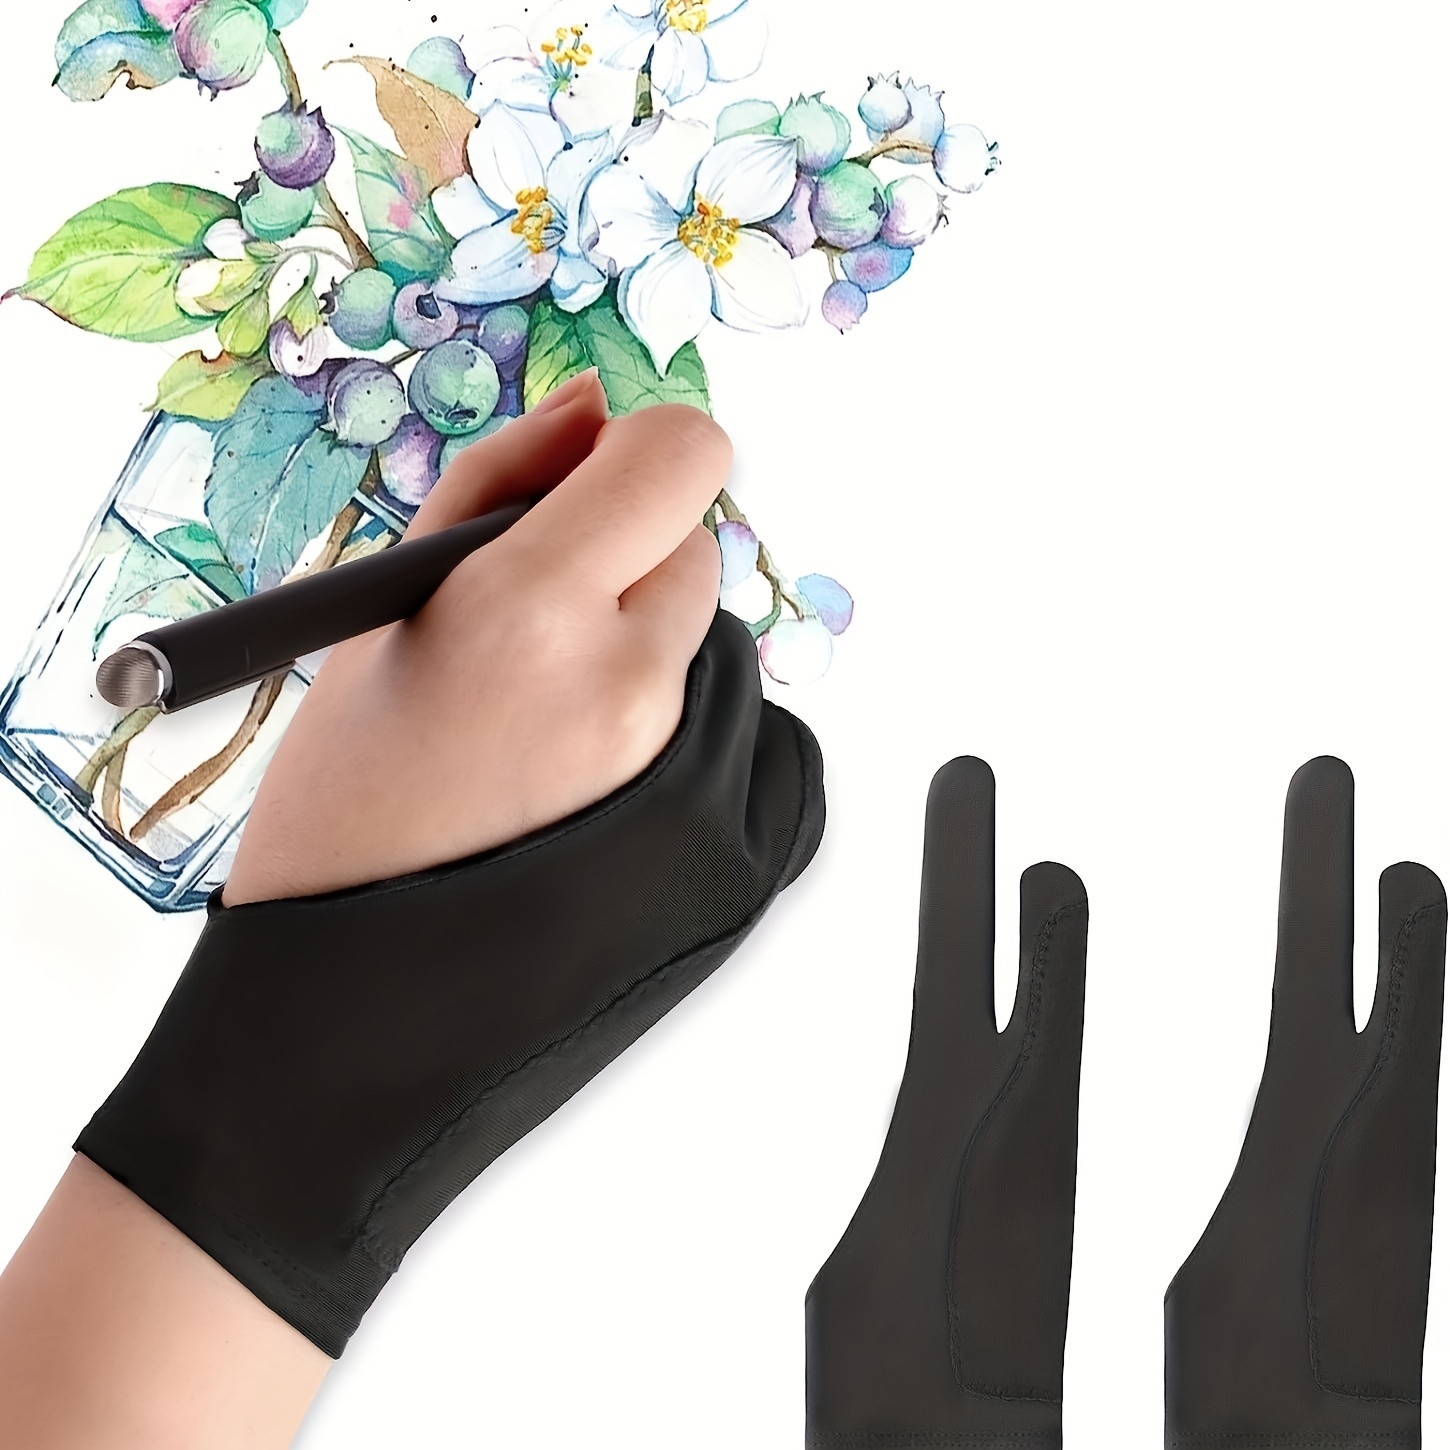 Veikk Drawing Glove Two-Finger Drawing Glove Lightweight Sweatproof Soft Glove for Veikk Graphics Tablet Graphic Monitor, Black